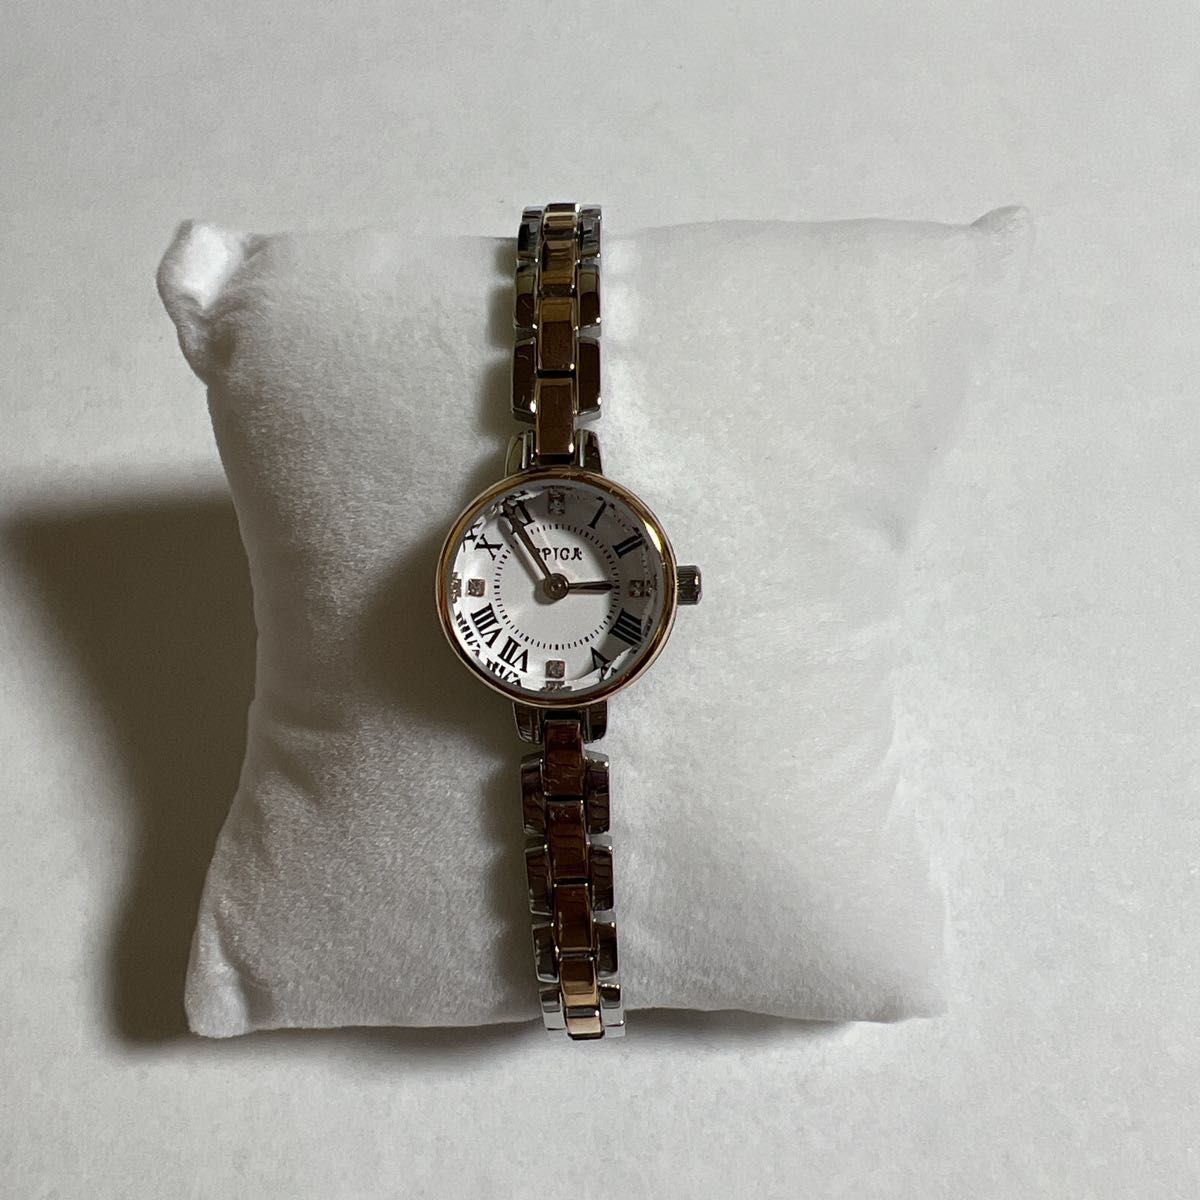 数量限定セール中送料無料【新品未使用】SPICA SPI55 腕時計